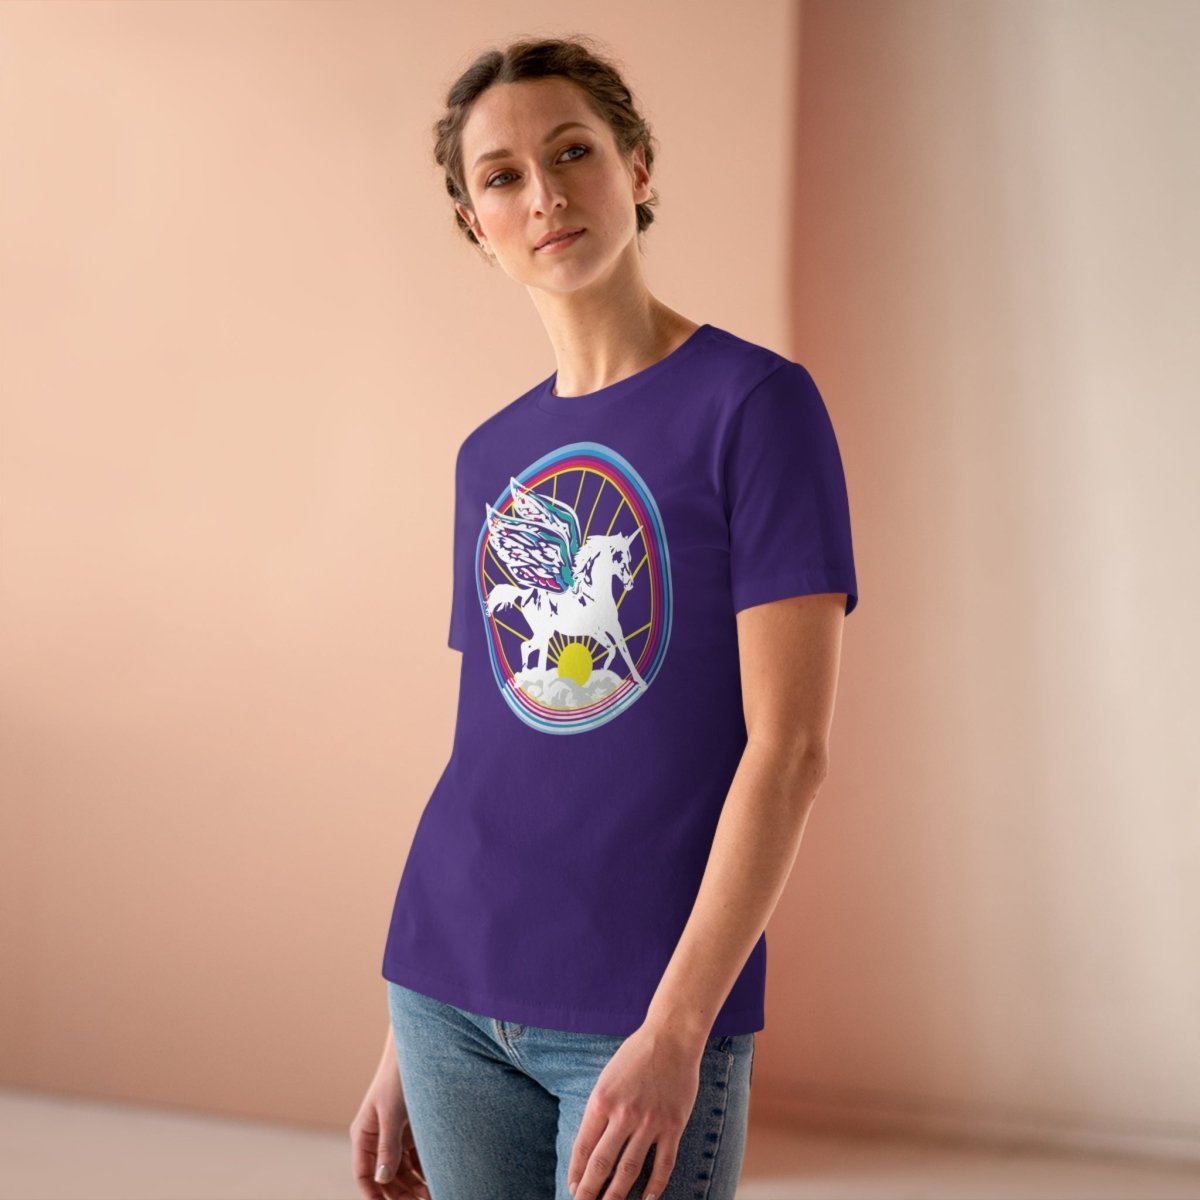 Unicorn Flight Women's Premium Relaxed Fit T-Shirt, Inspire Unique Fantasy